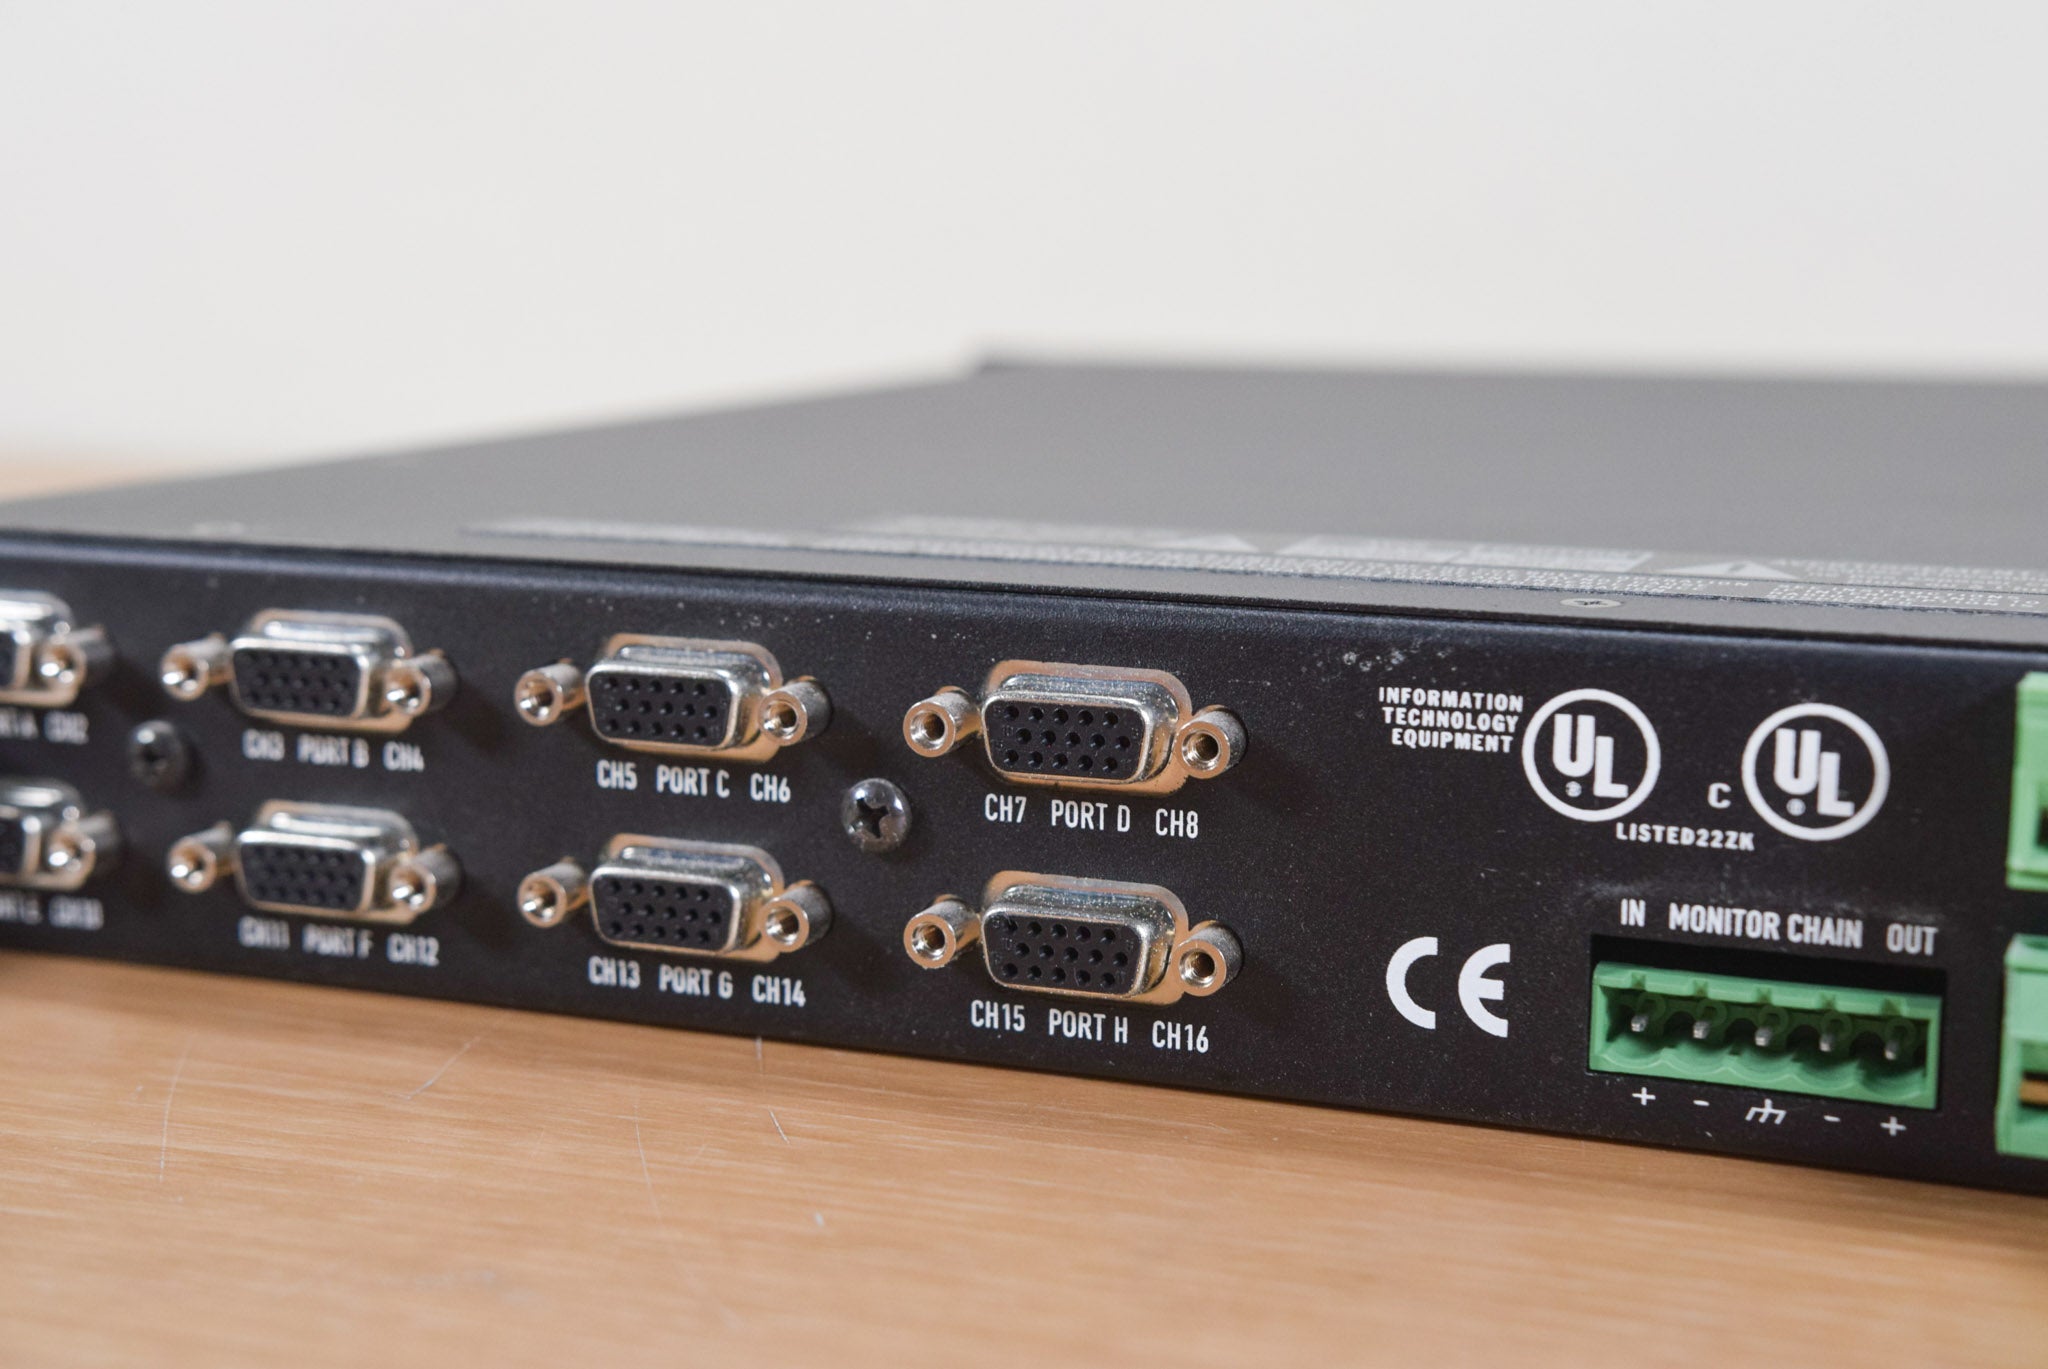 QSC Basis 904zz Amplifier/Loudspeaker Control Processor